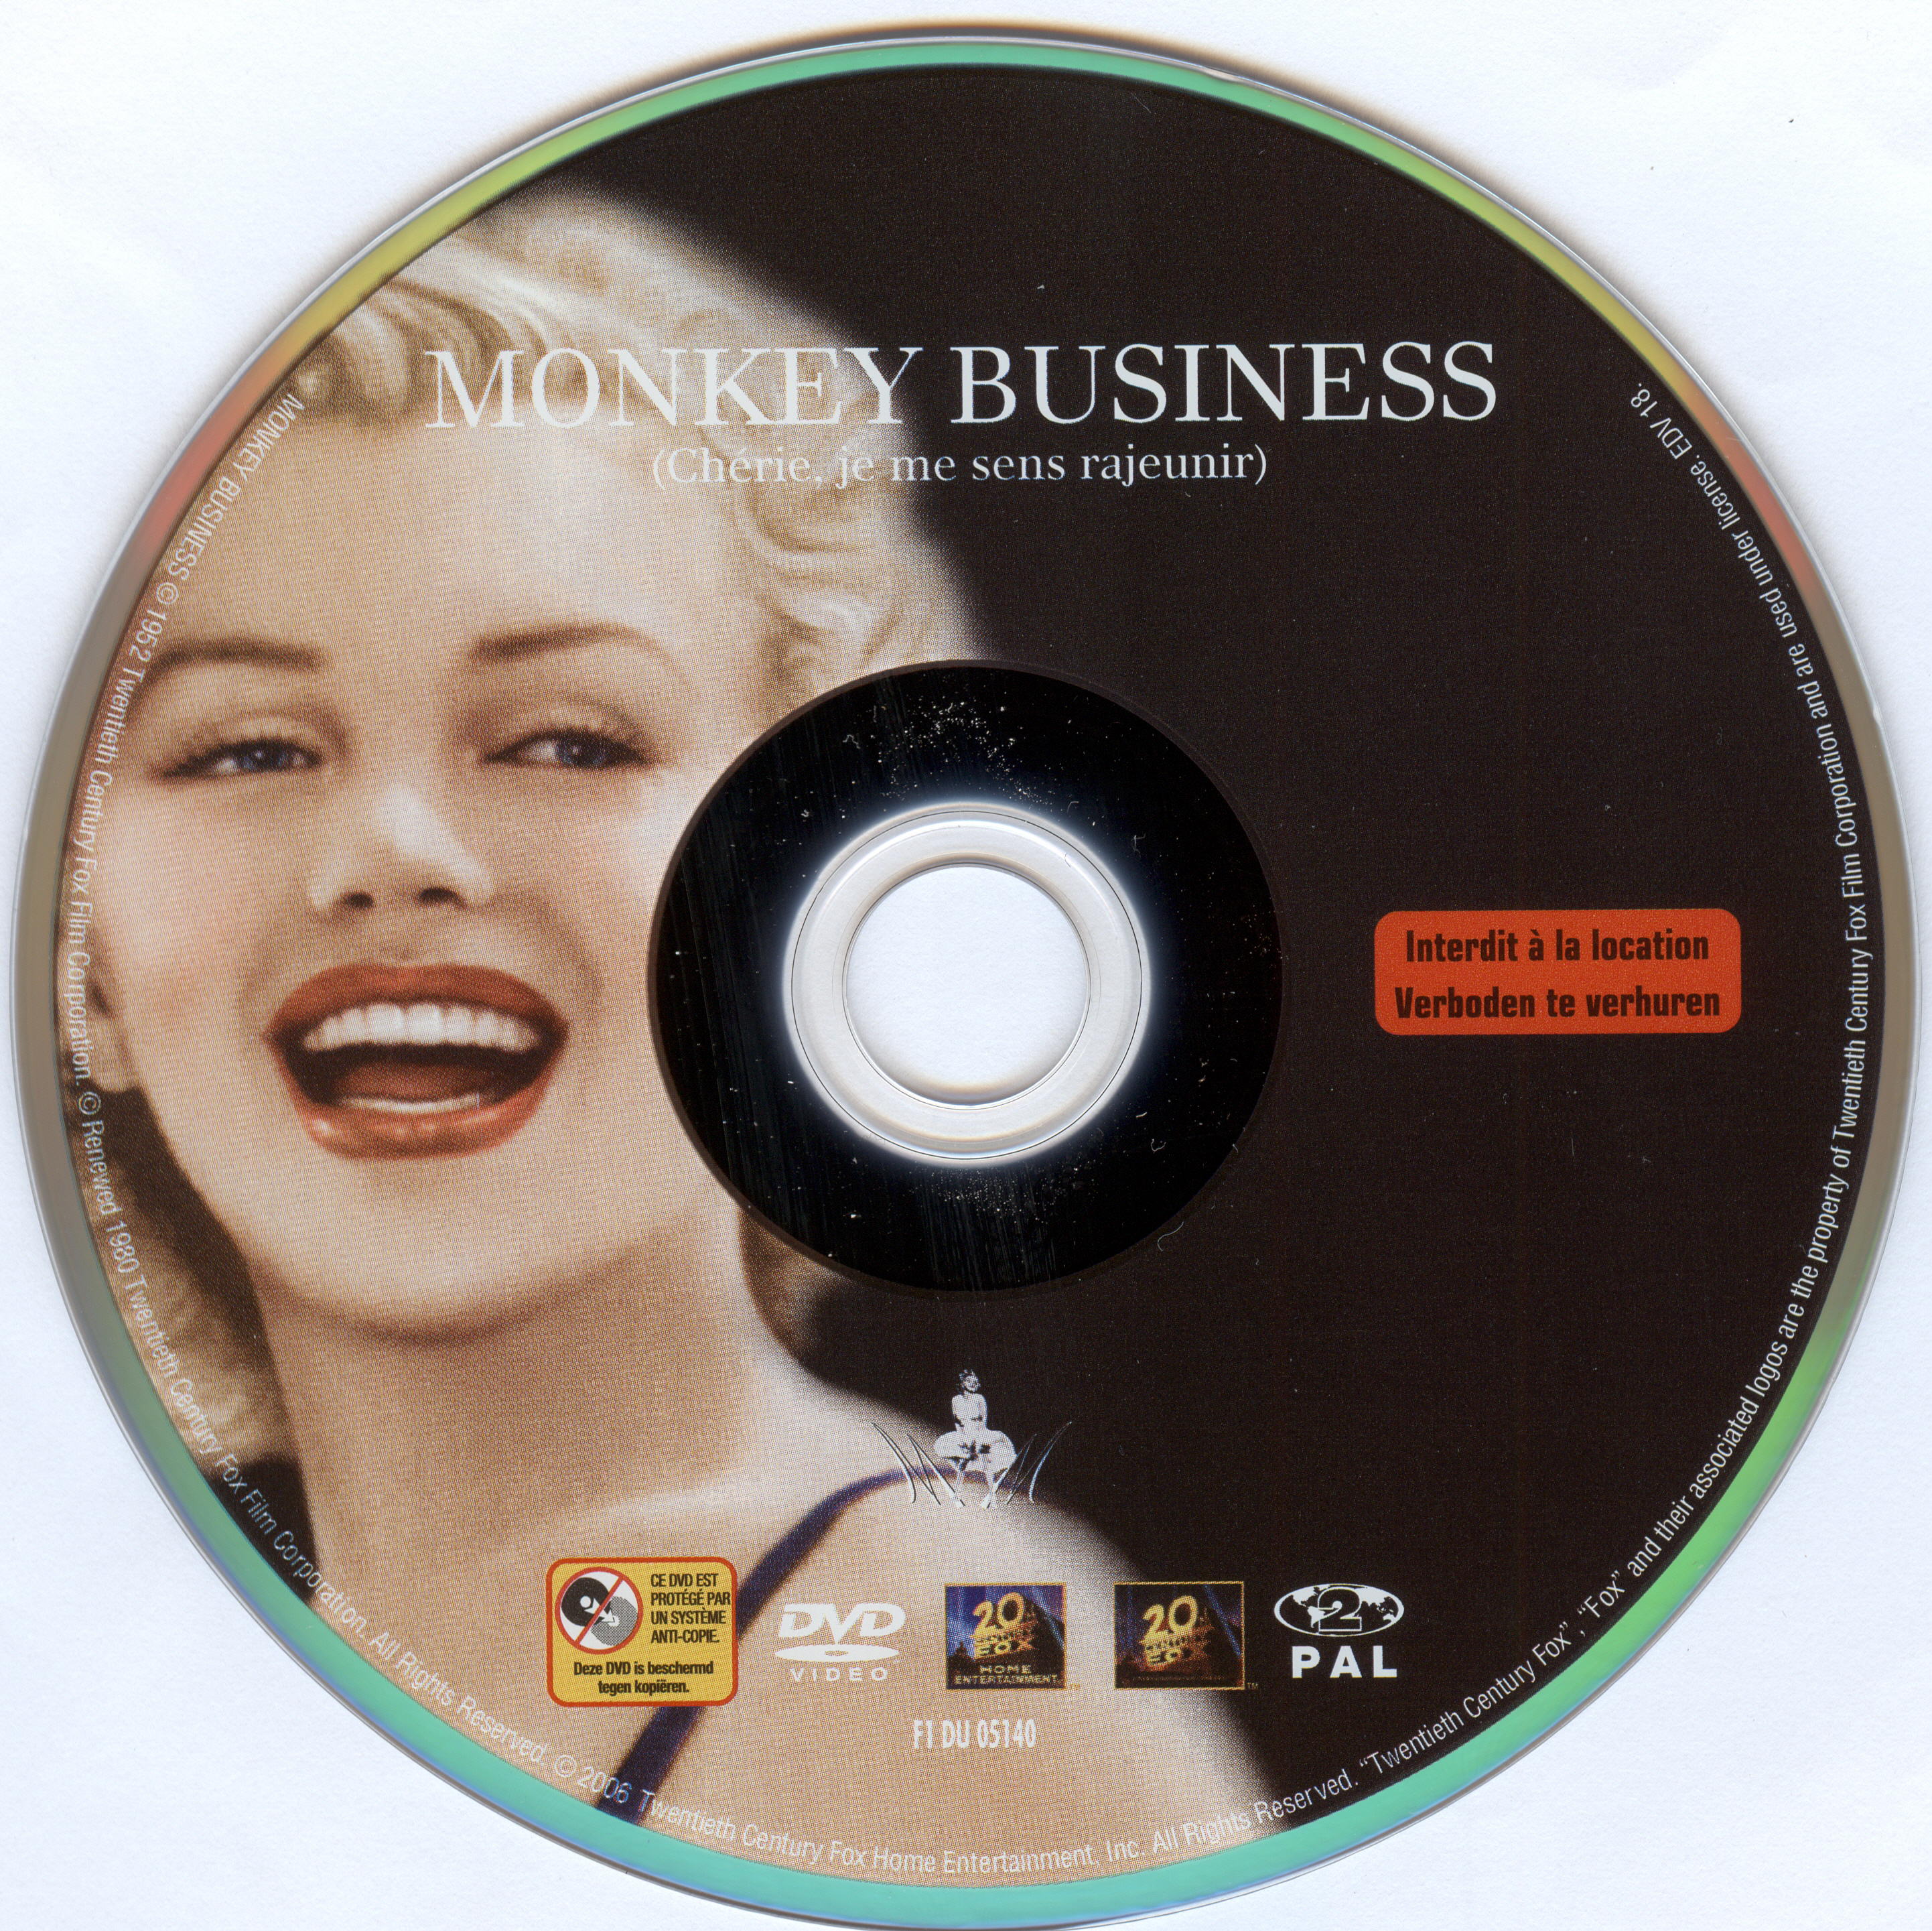 Monkey business - Chrie je me sens rajeunir